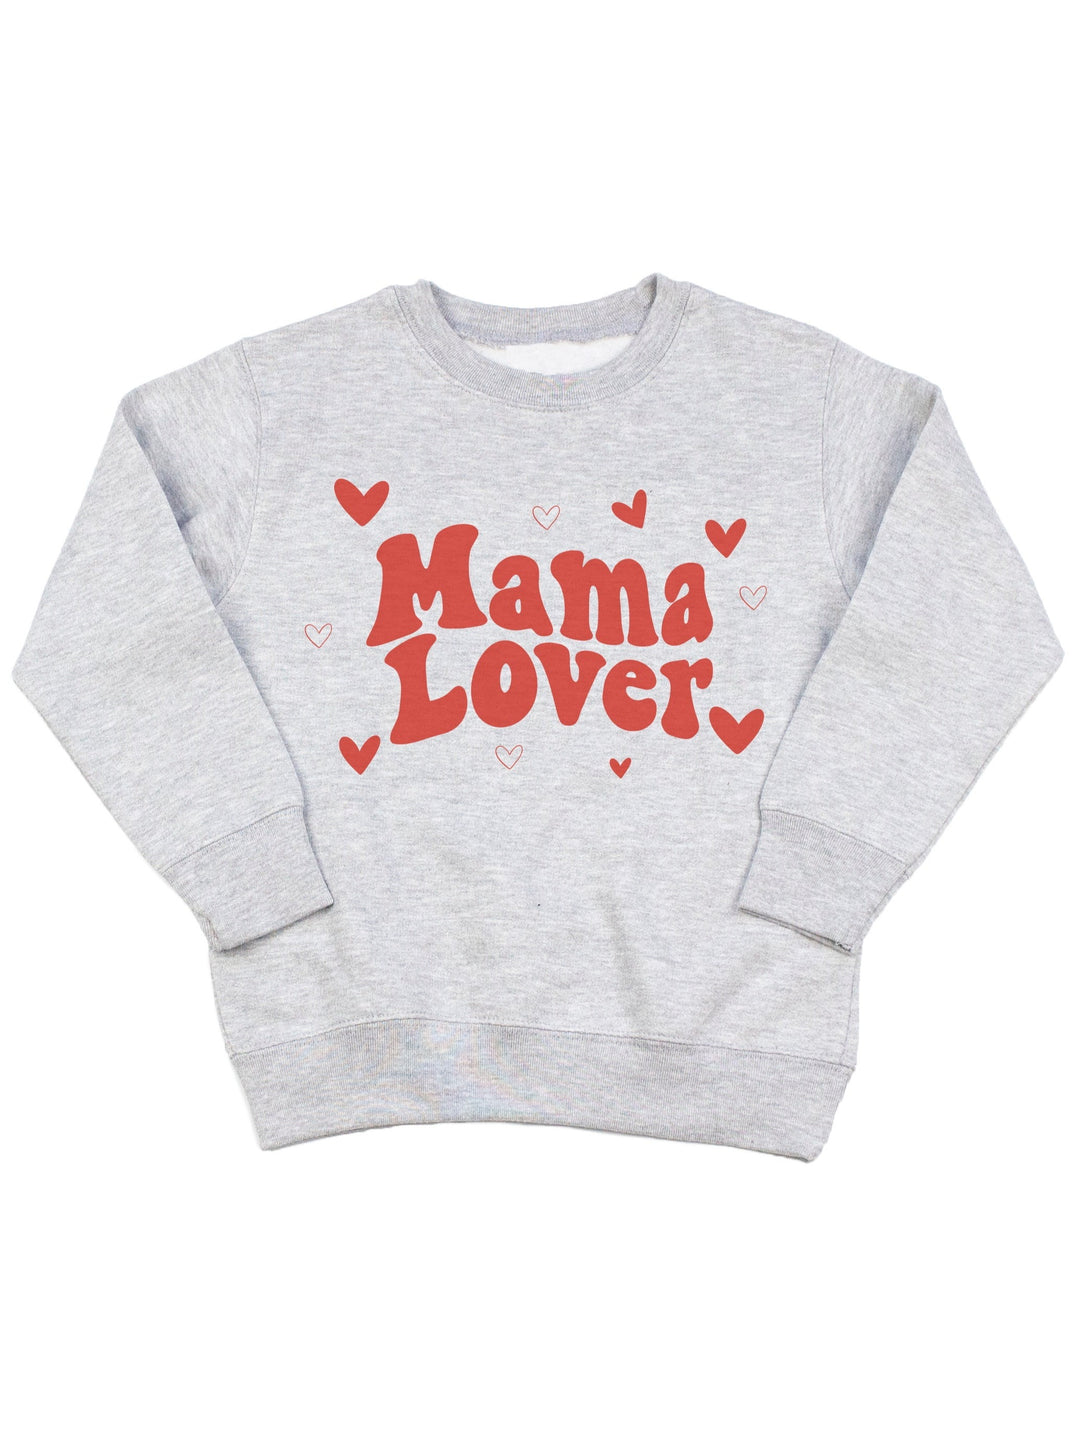 Mama Lover Kids Sweatshirt